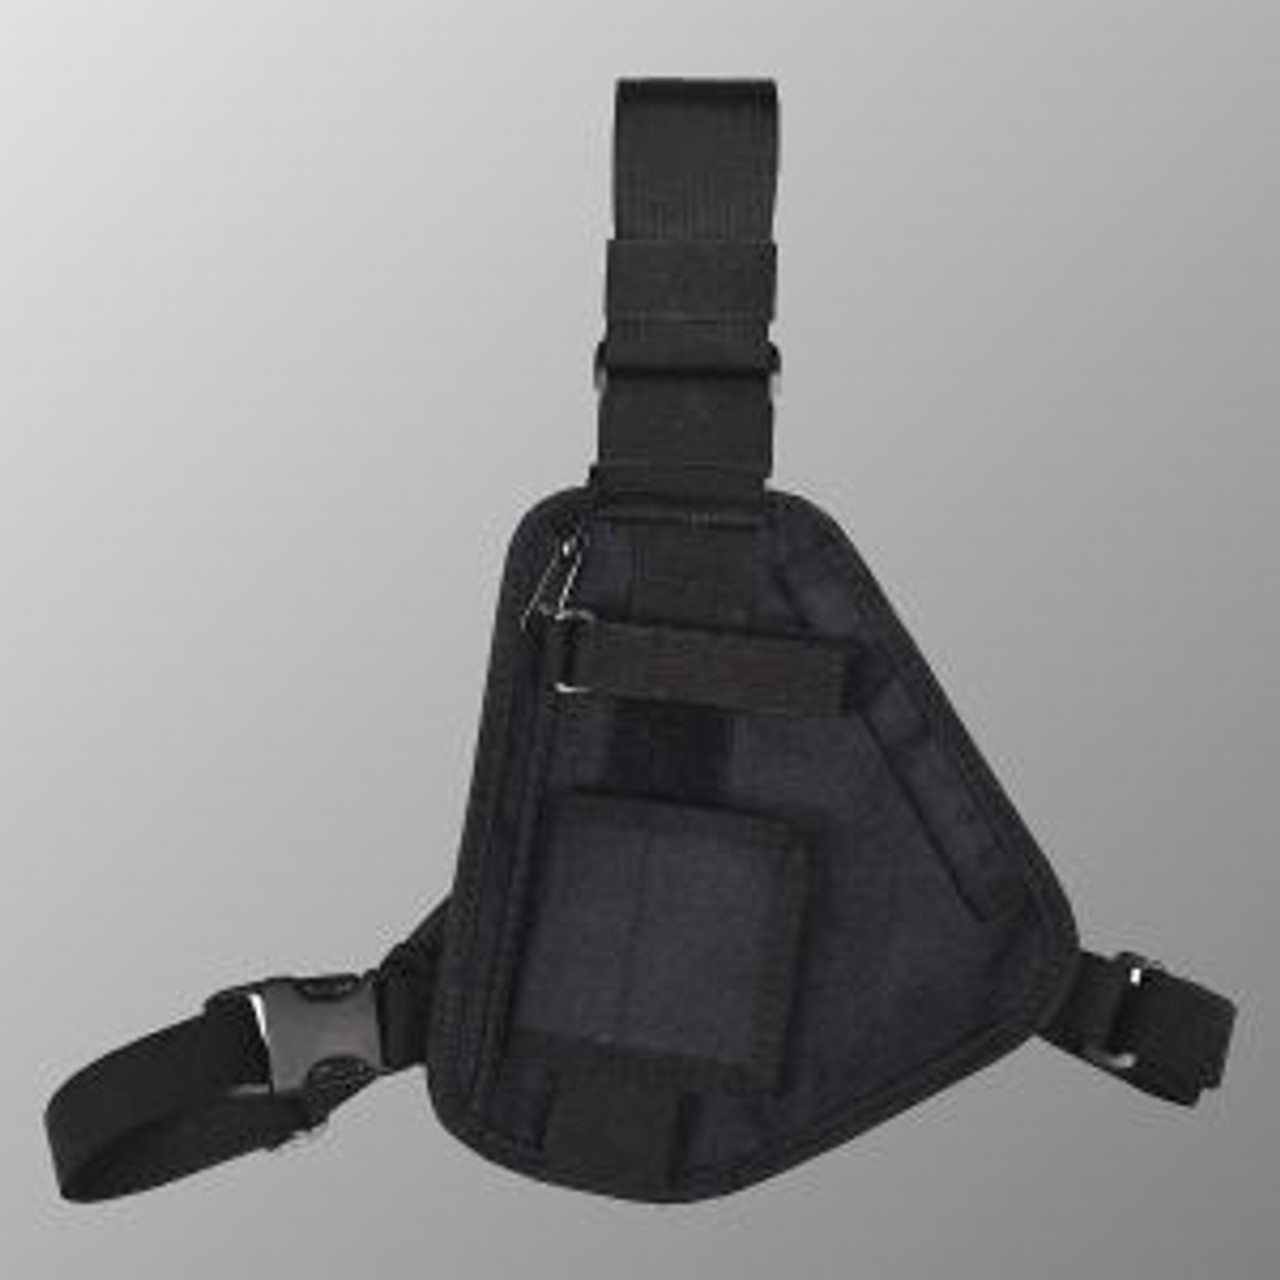 ICOM IC-F33GT 3-Point Chest Harness - Black